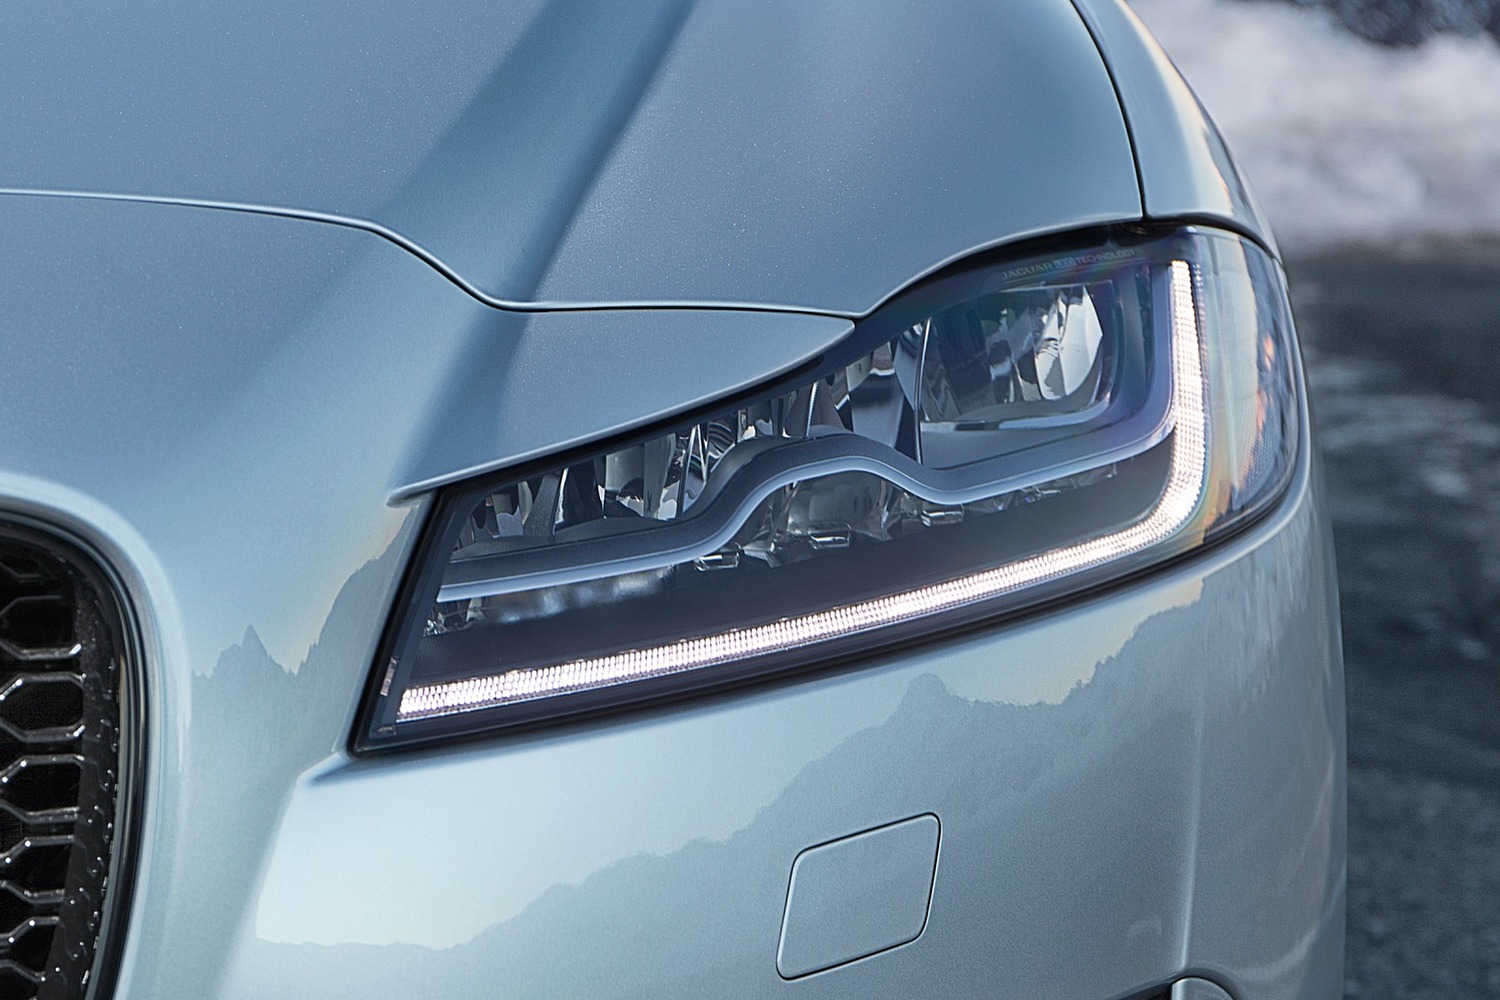 Jaguar XF 20d R-Sport Sedan Headlamp Detail (2017 model year shown)